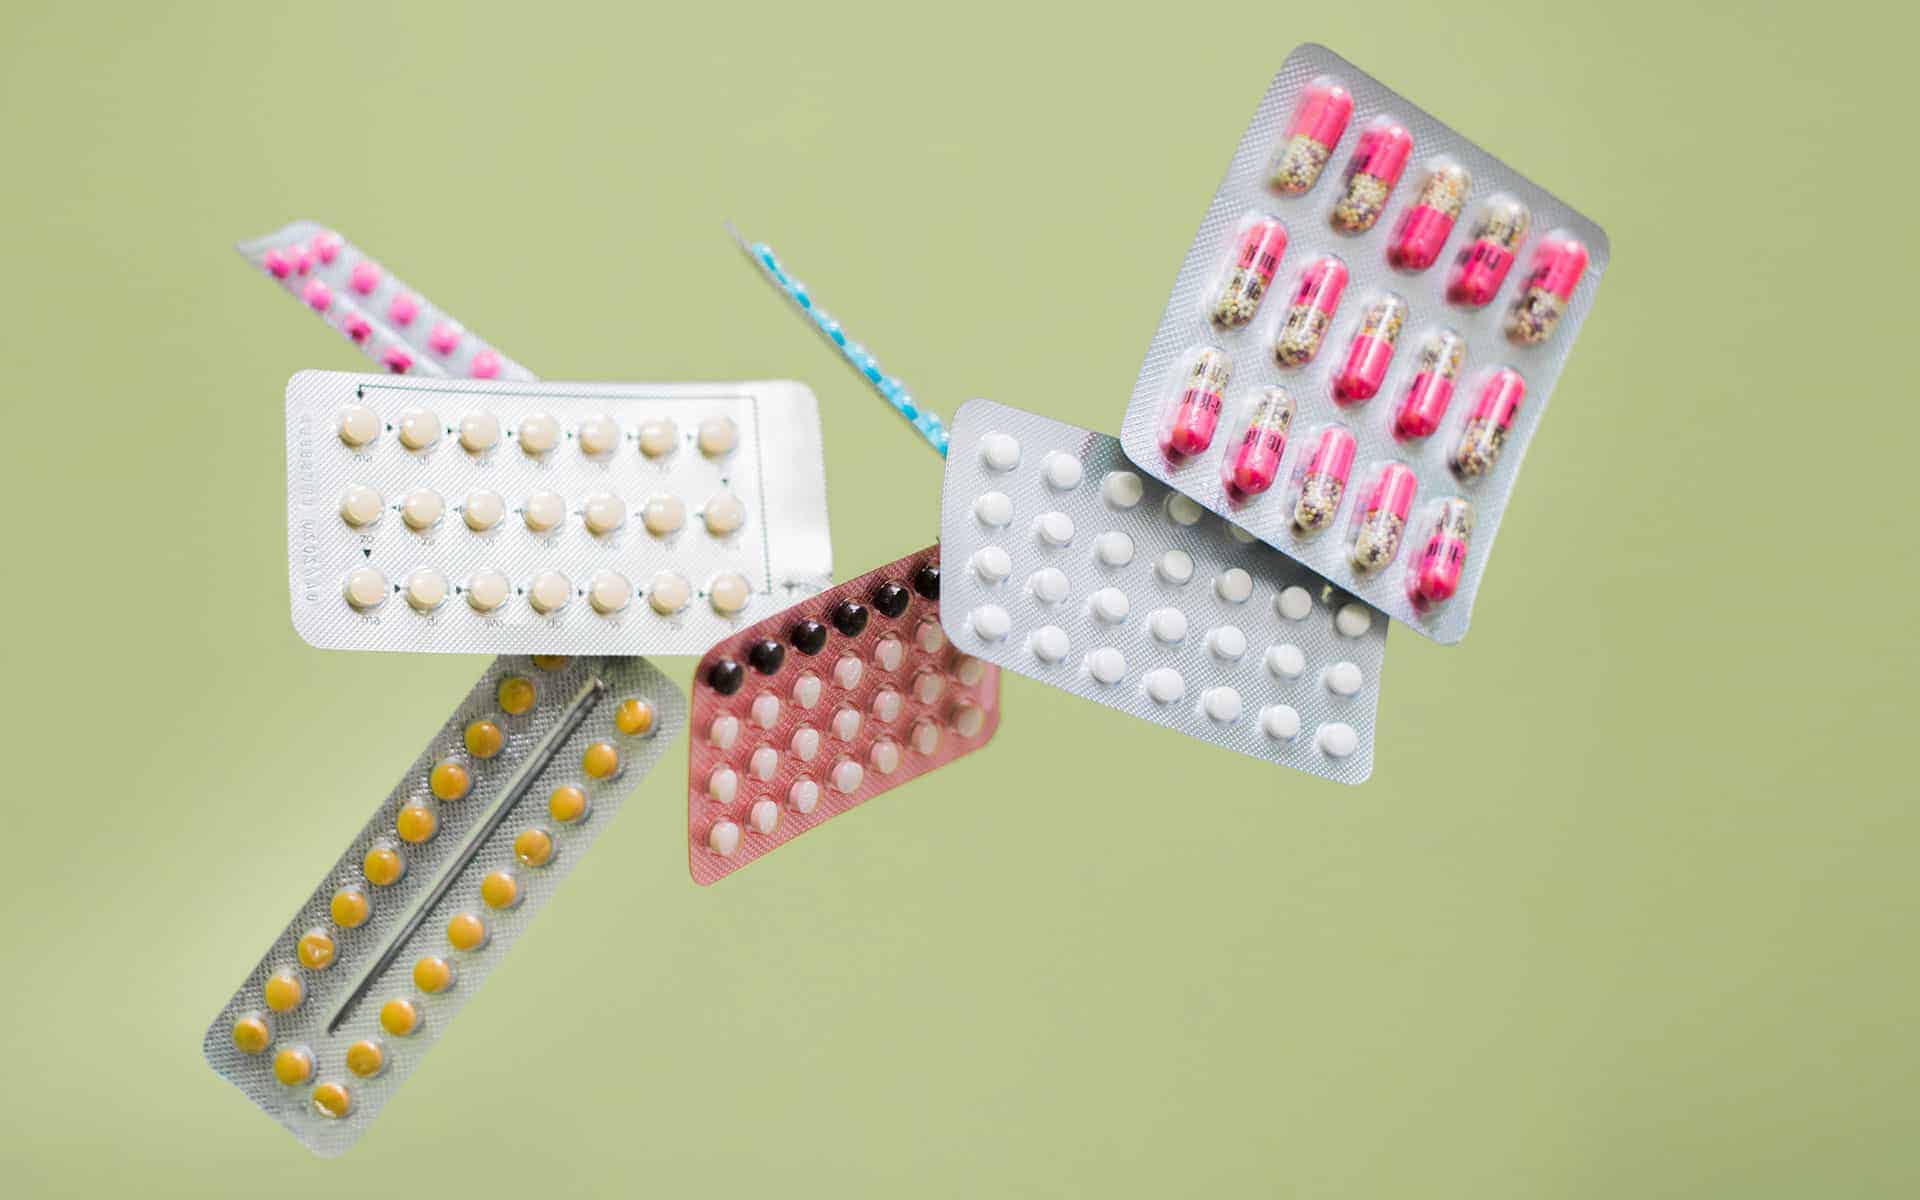  anticonceptivos